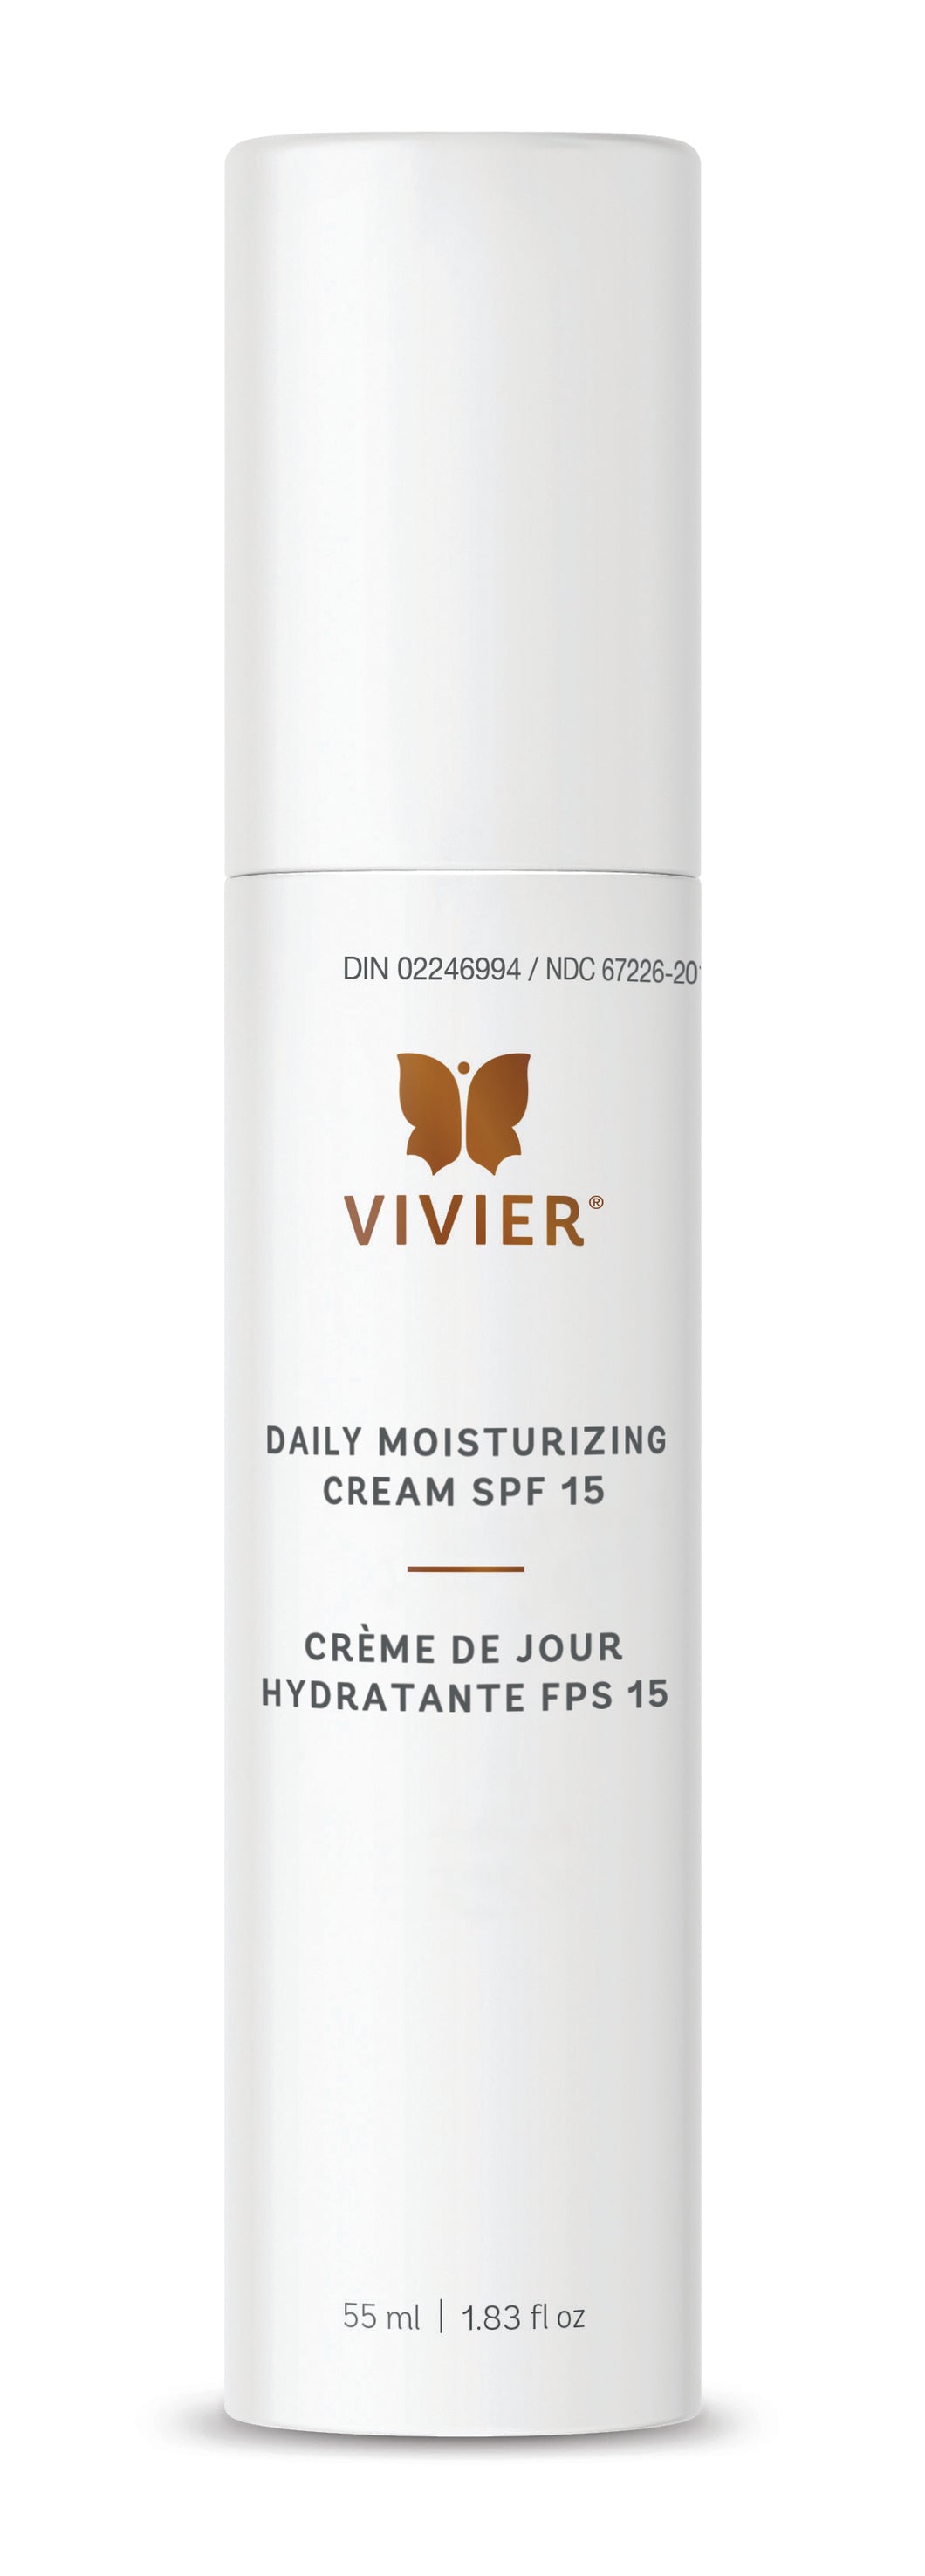 Daily Moisturizing Cream SPF 15